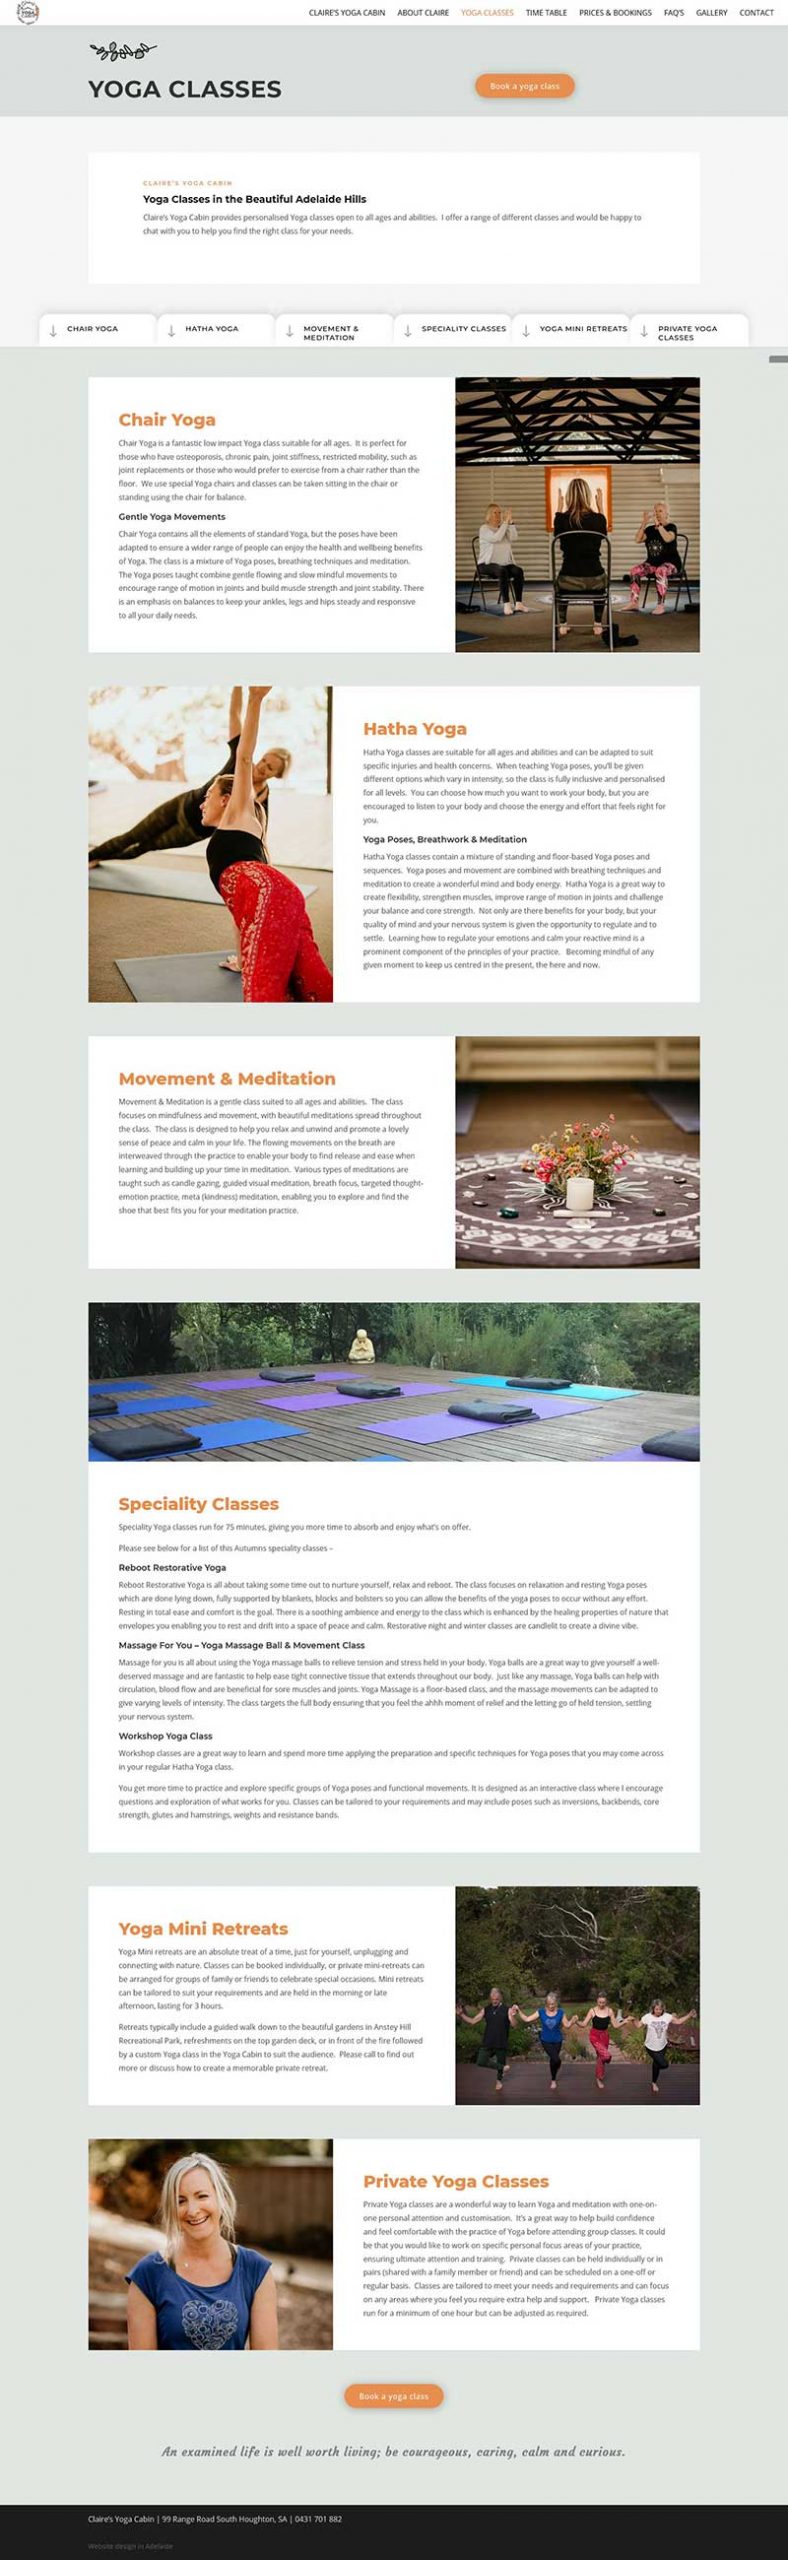 website design for a yoga studio in adelaide hills